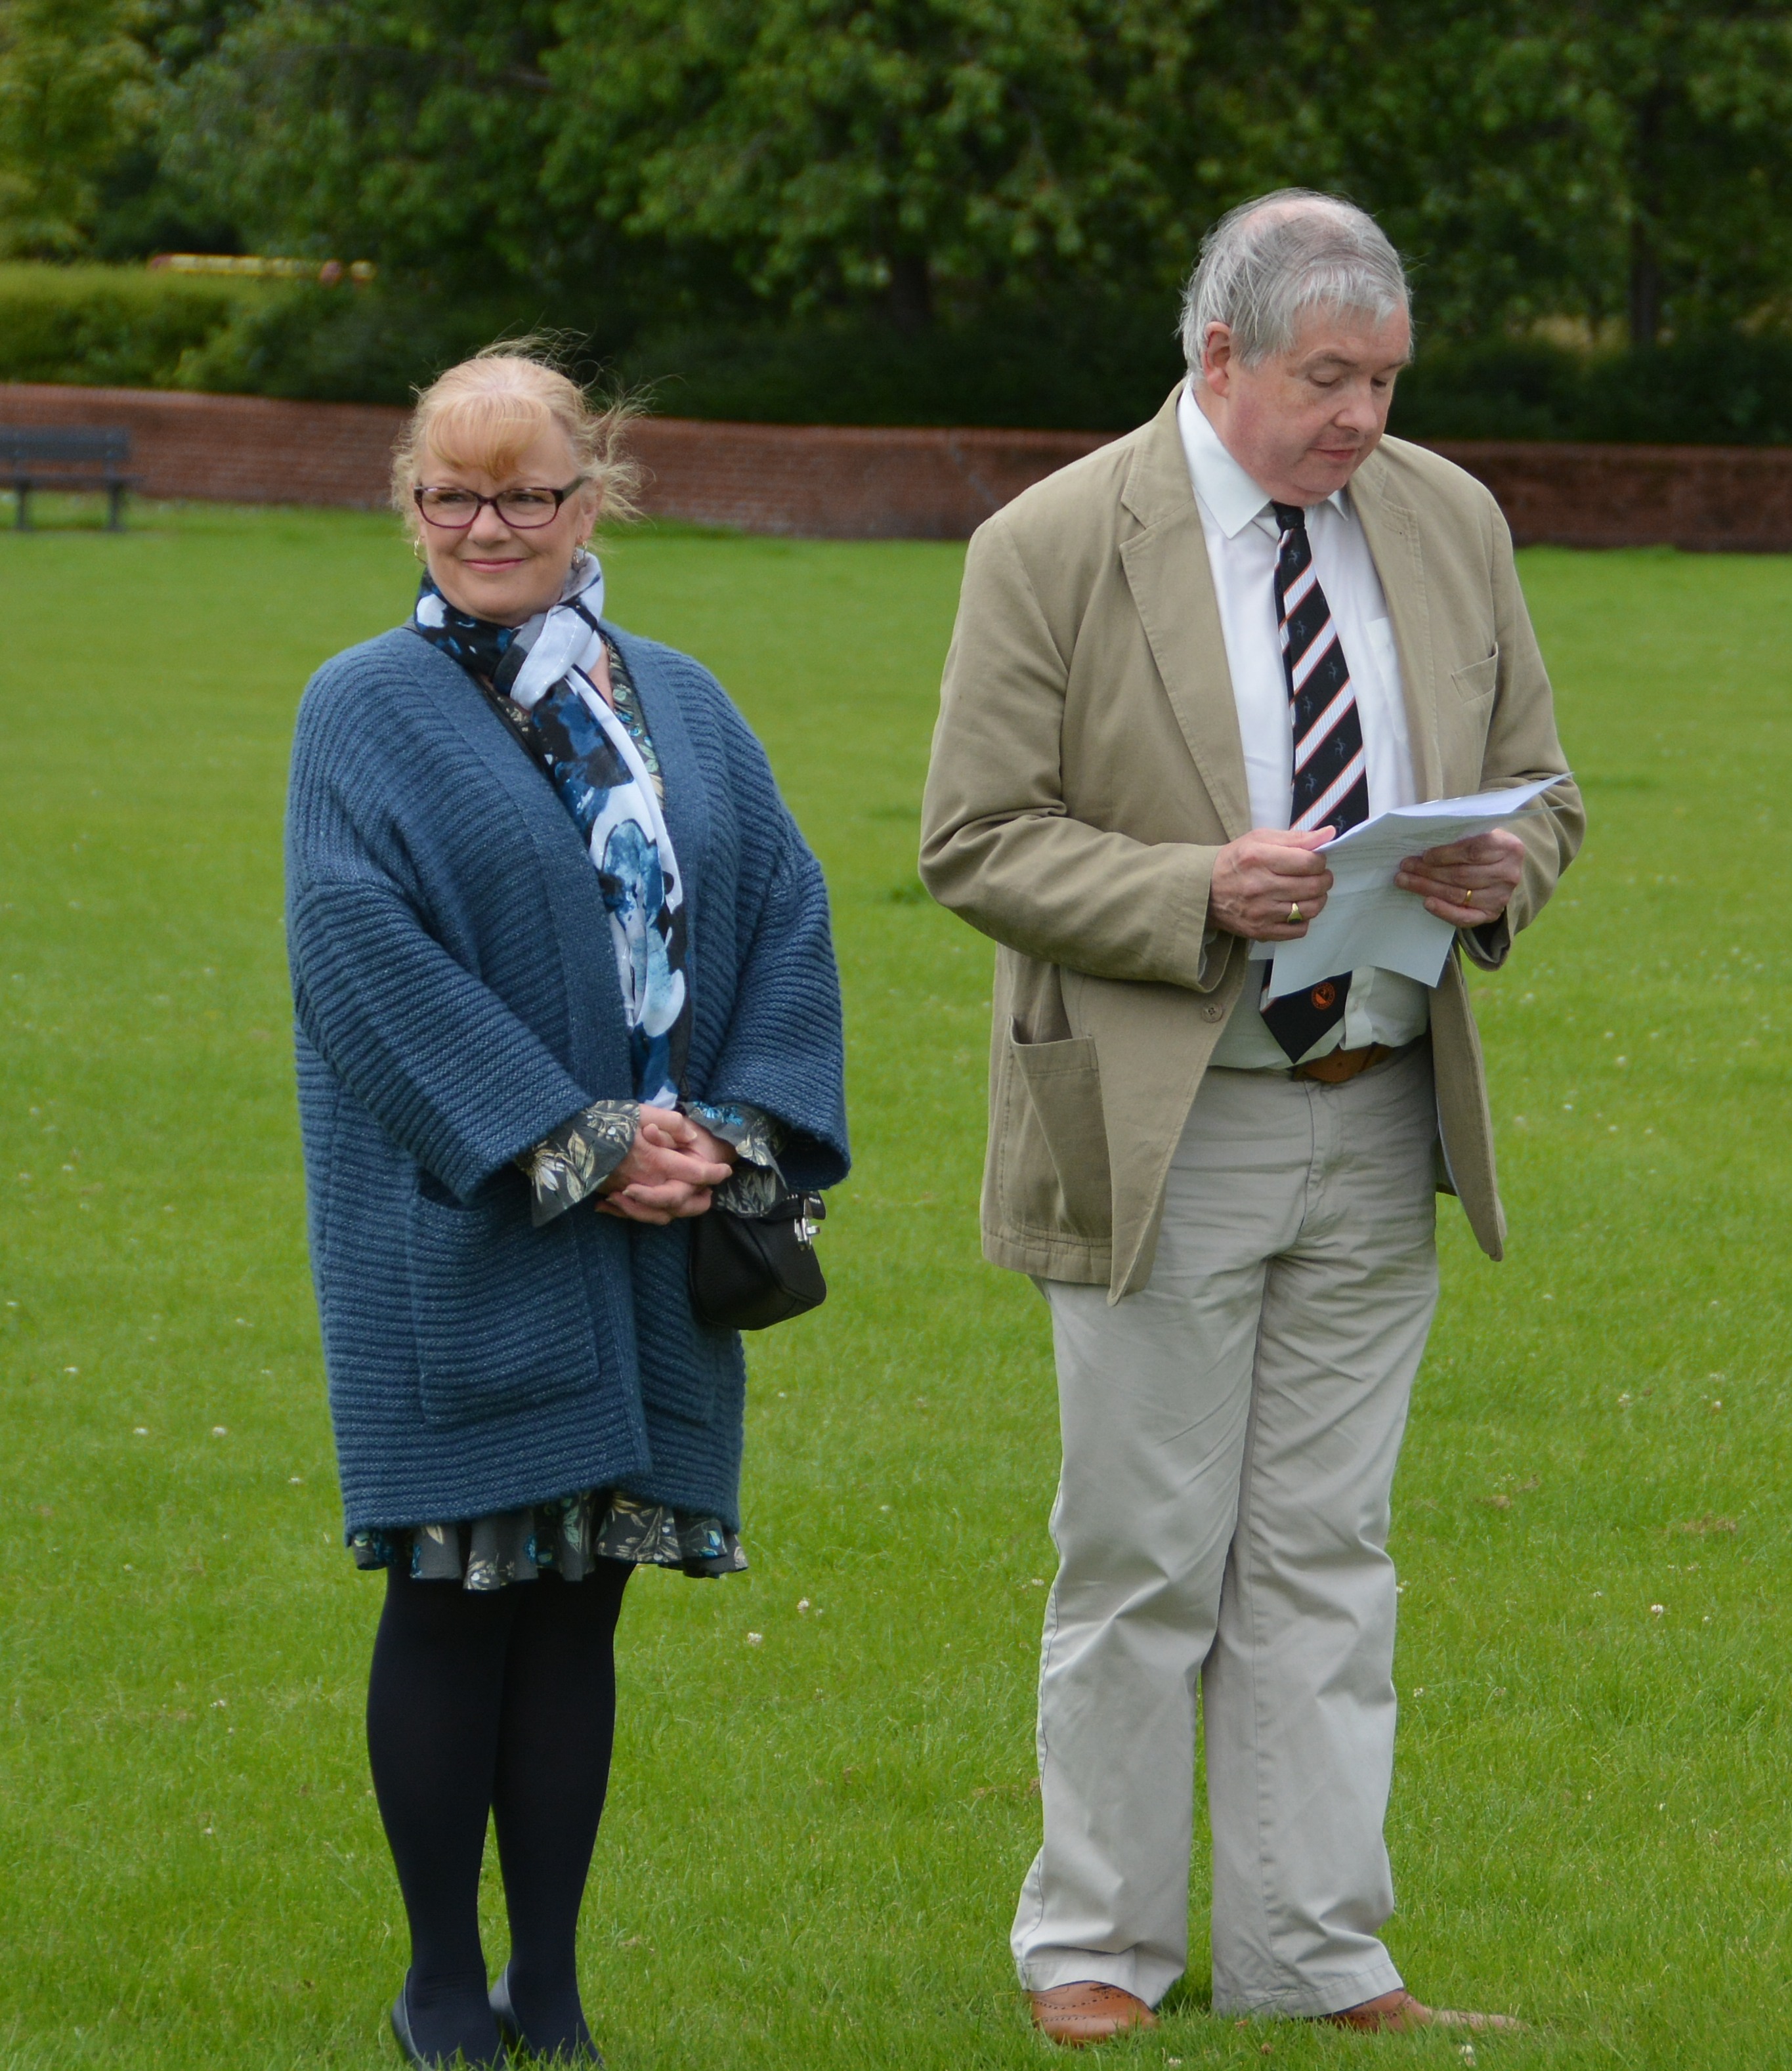 Chairman Jamie Sharp accompanied by wife, Joyce, opens proceedings